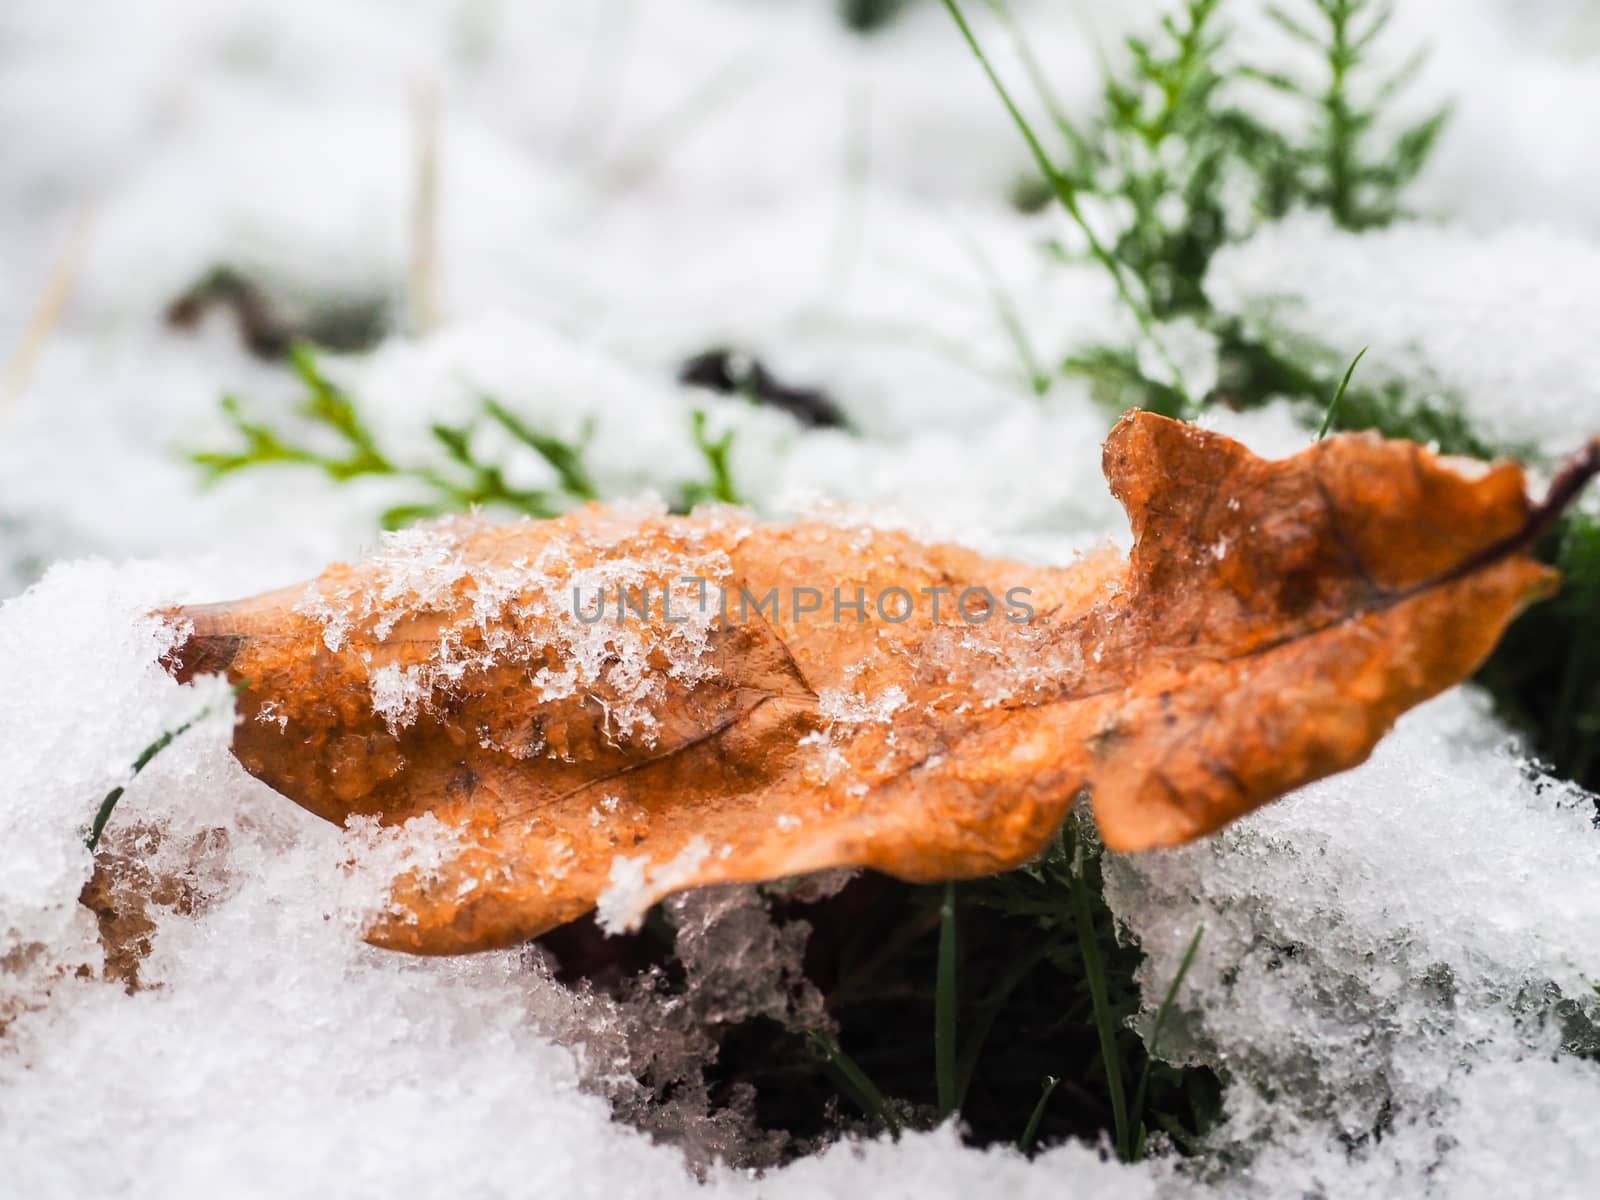 Brown oak tree leaf with a fresh layer of snow by Arvebettum